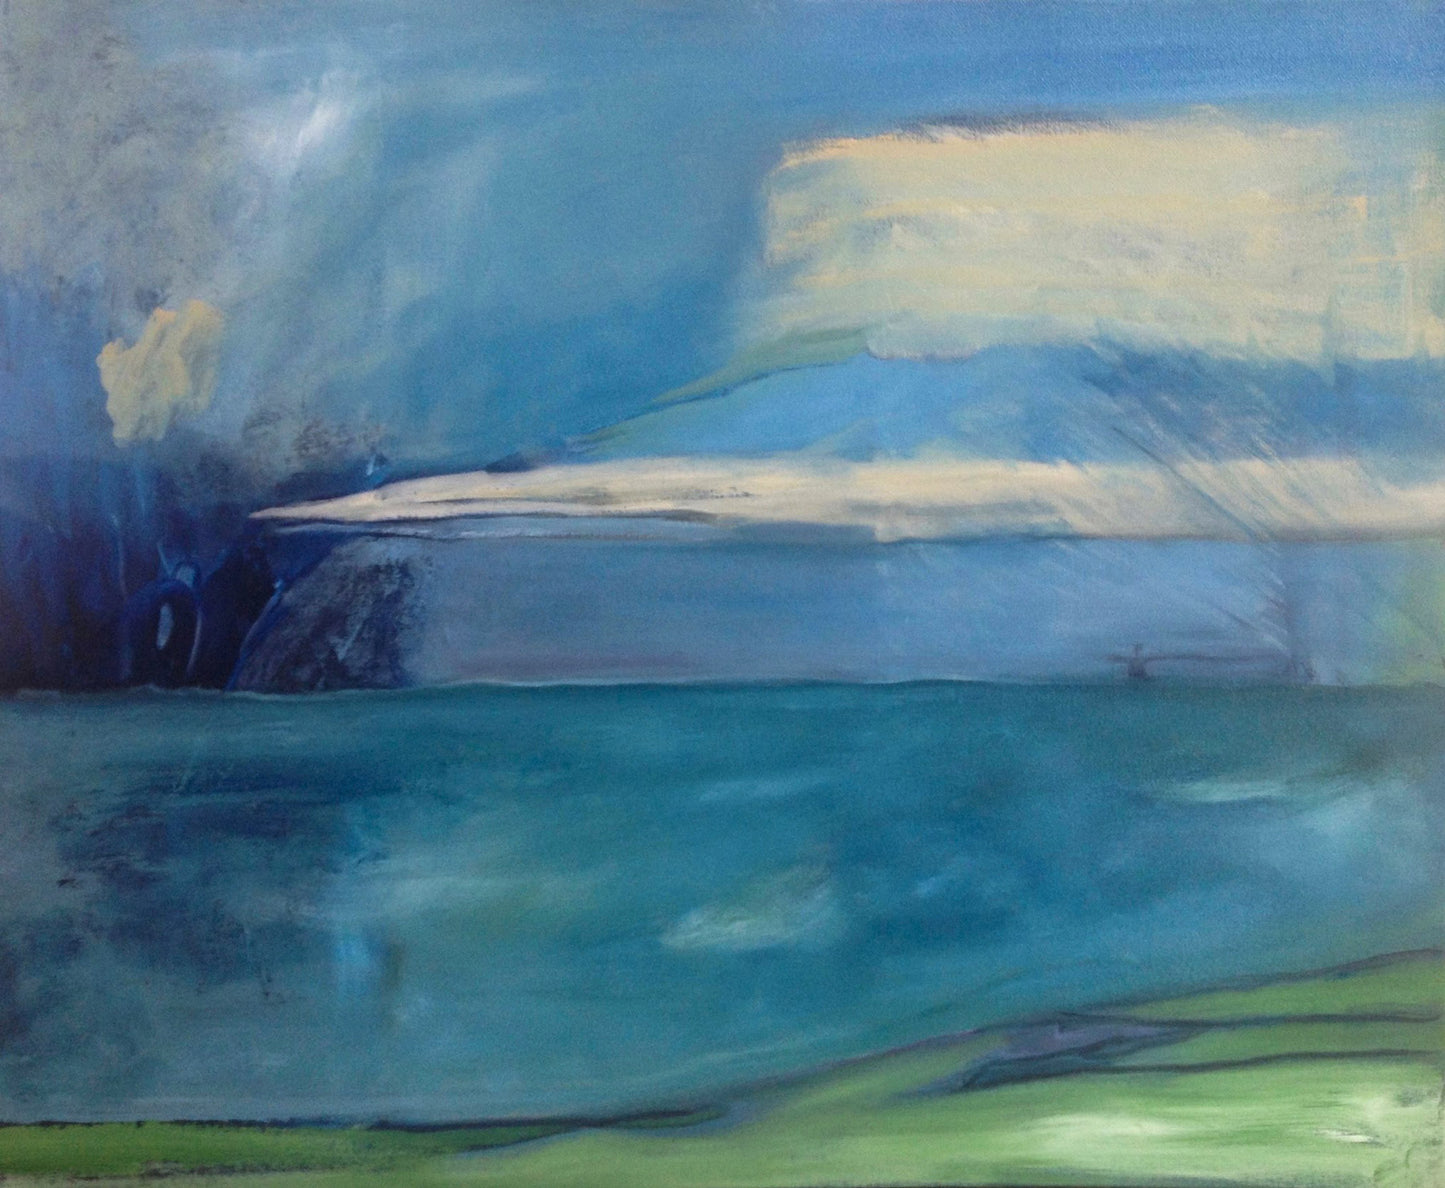 Dunlaoghaire Pier with Alexandra - Size: 51 x 61 cm,  Medium: Oil on Canvas Board